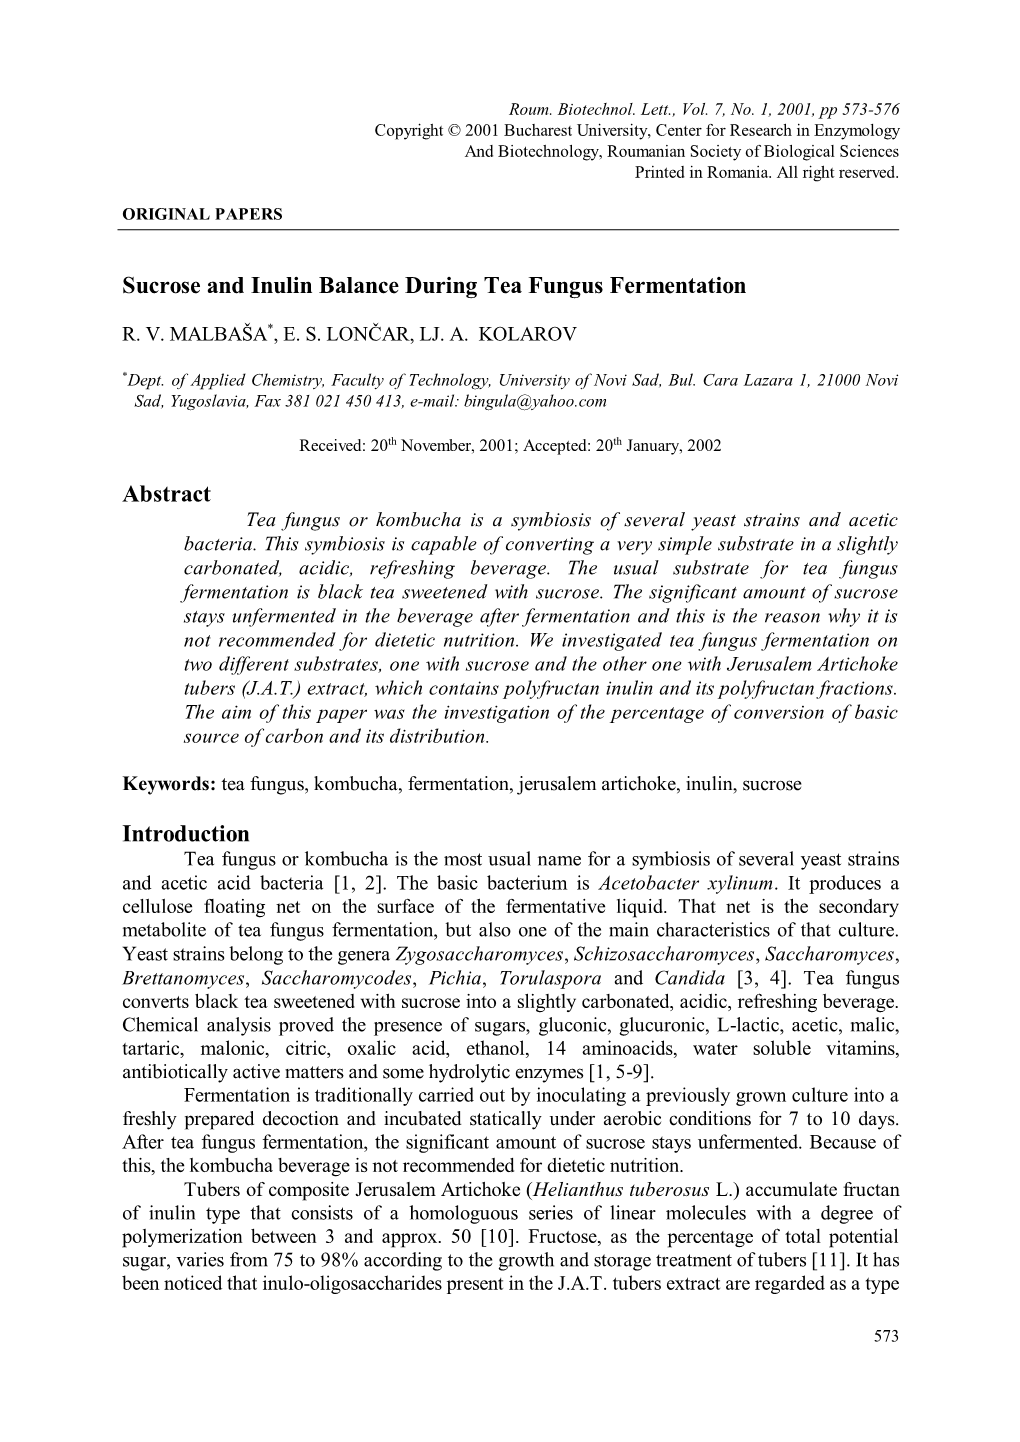 Sucrose and Inulin Balance During Tea Fungus Fermentation